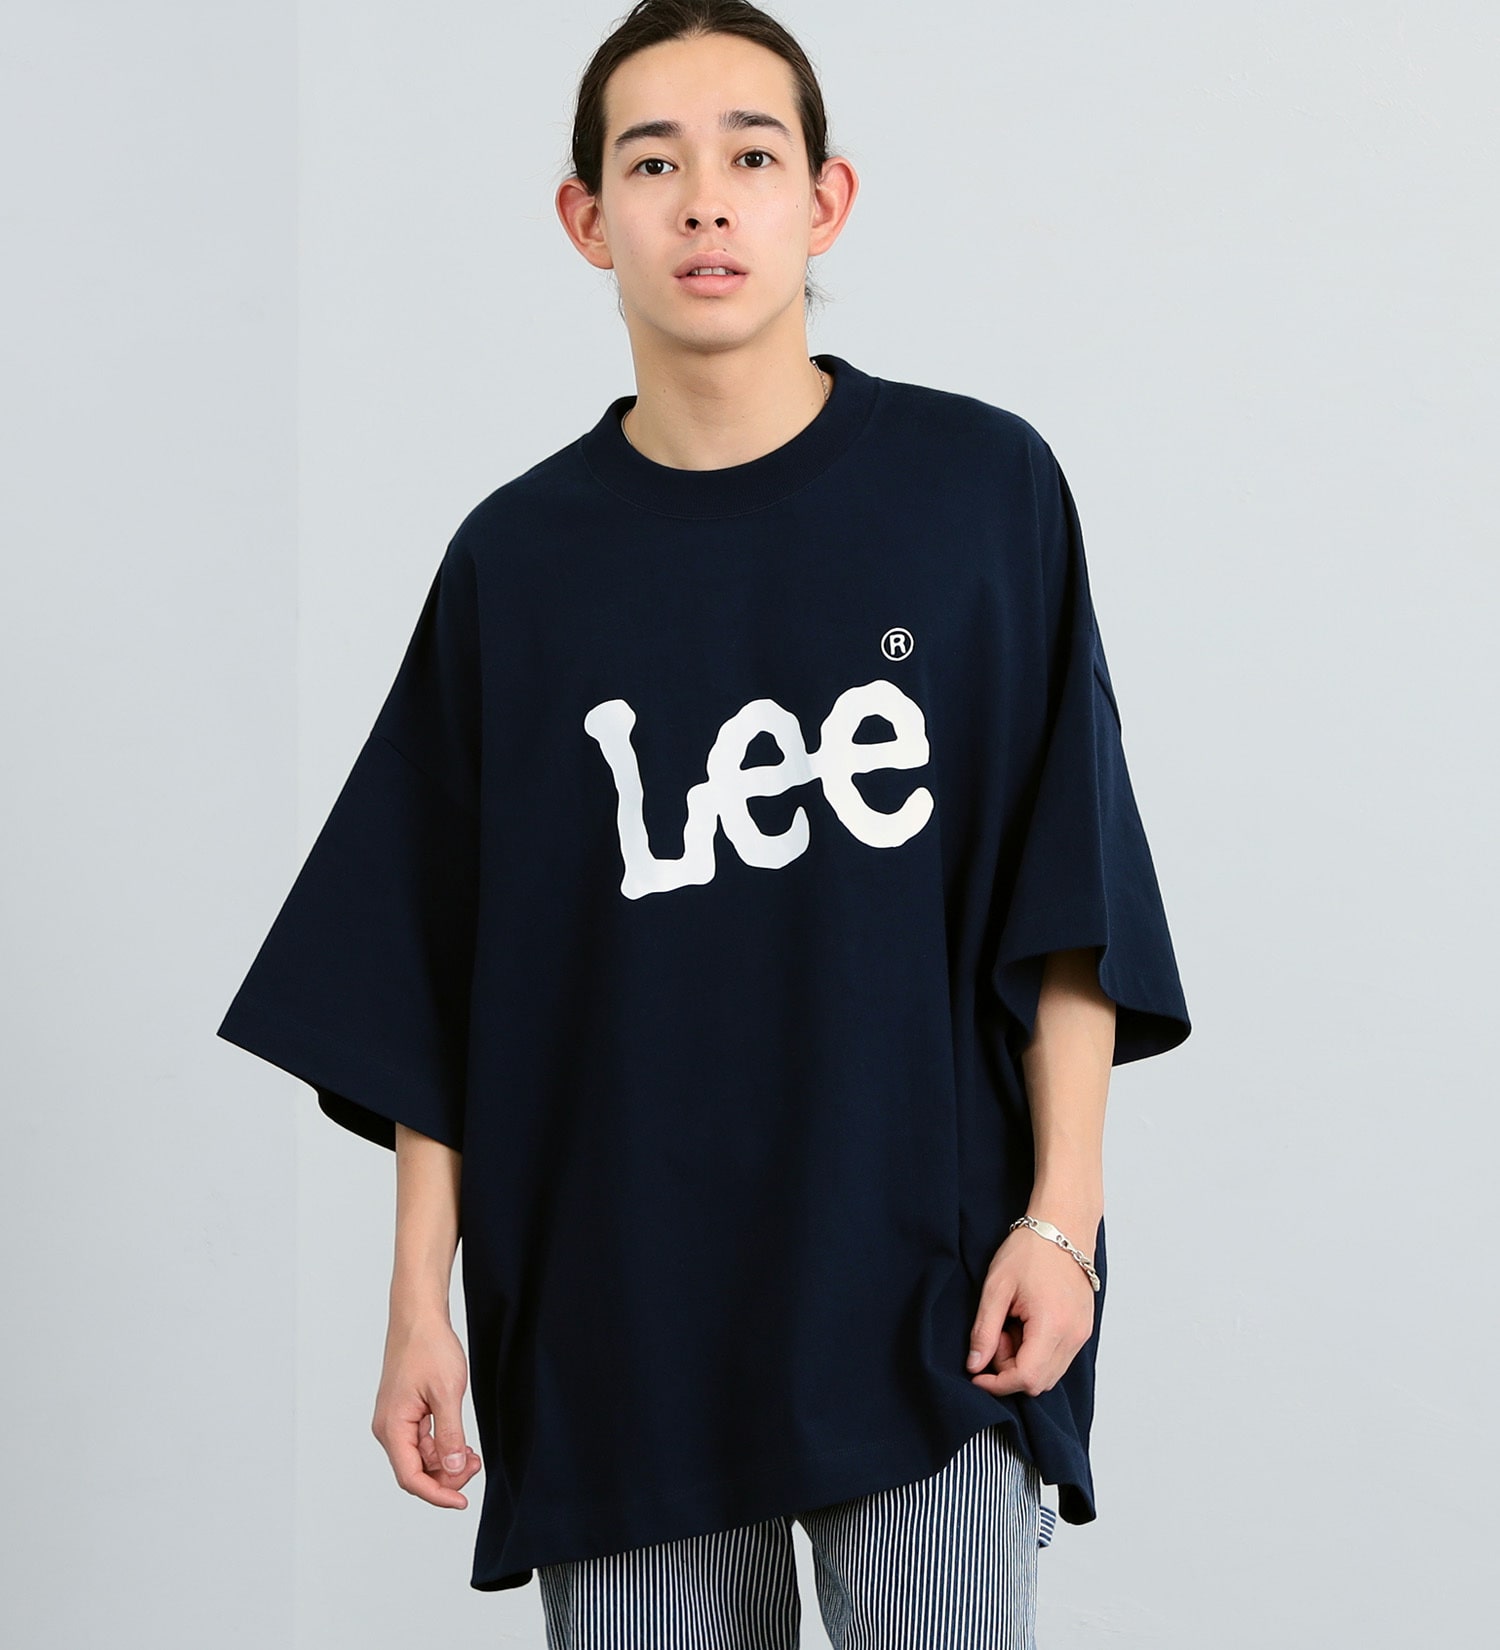 Lee(リー)の【SUPER SIZED】Lee LOGO ショートスリーブTee|トップス/Tシャツ/カットソー/メンズ|ネイビー